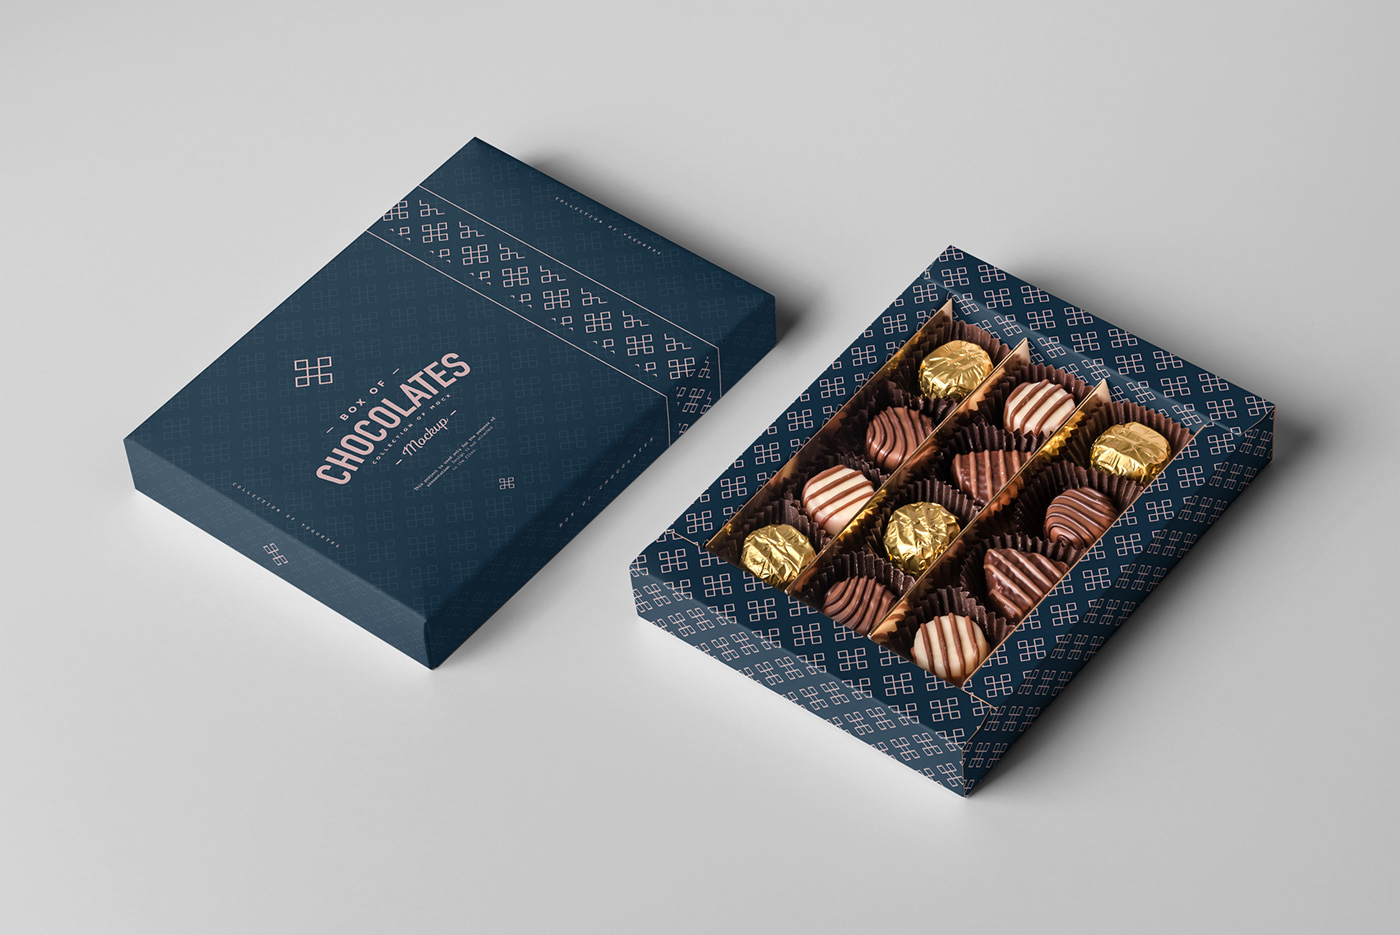 box cardboard chocolate design elegant gift graphics Mockup Packaging